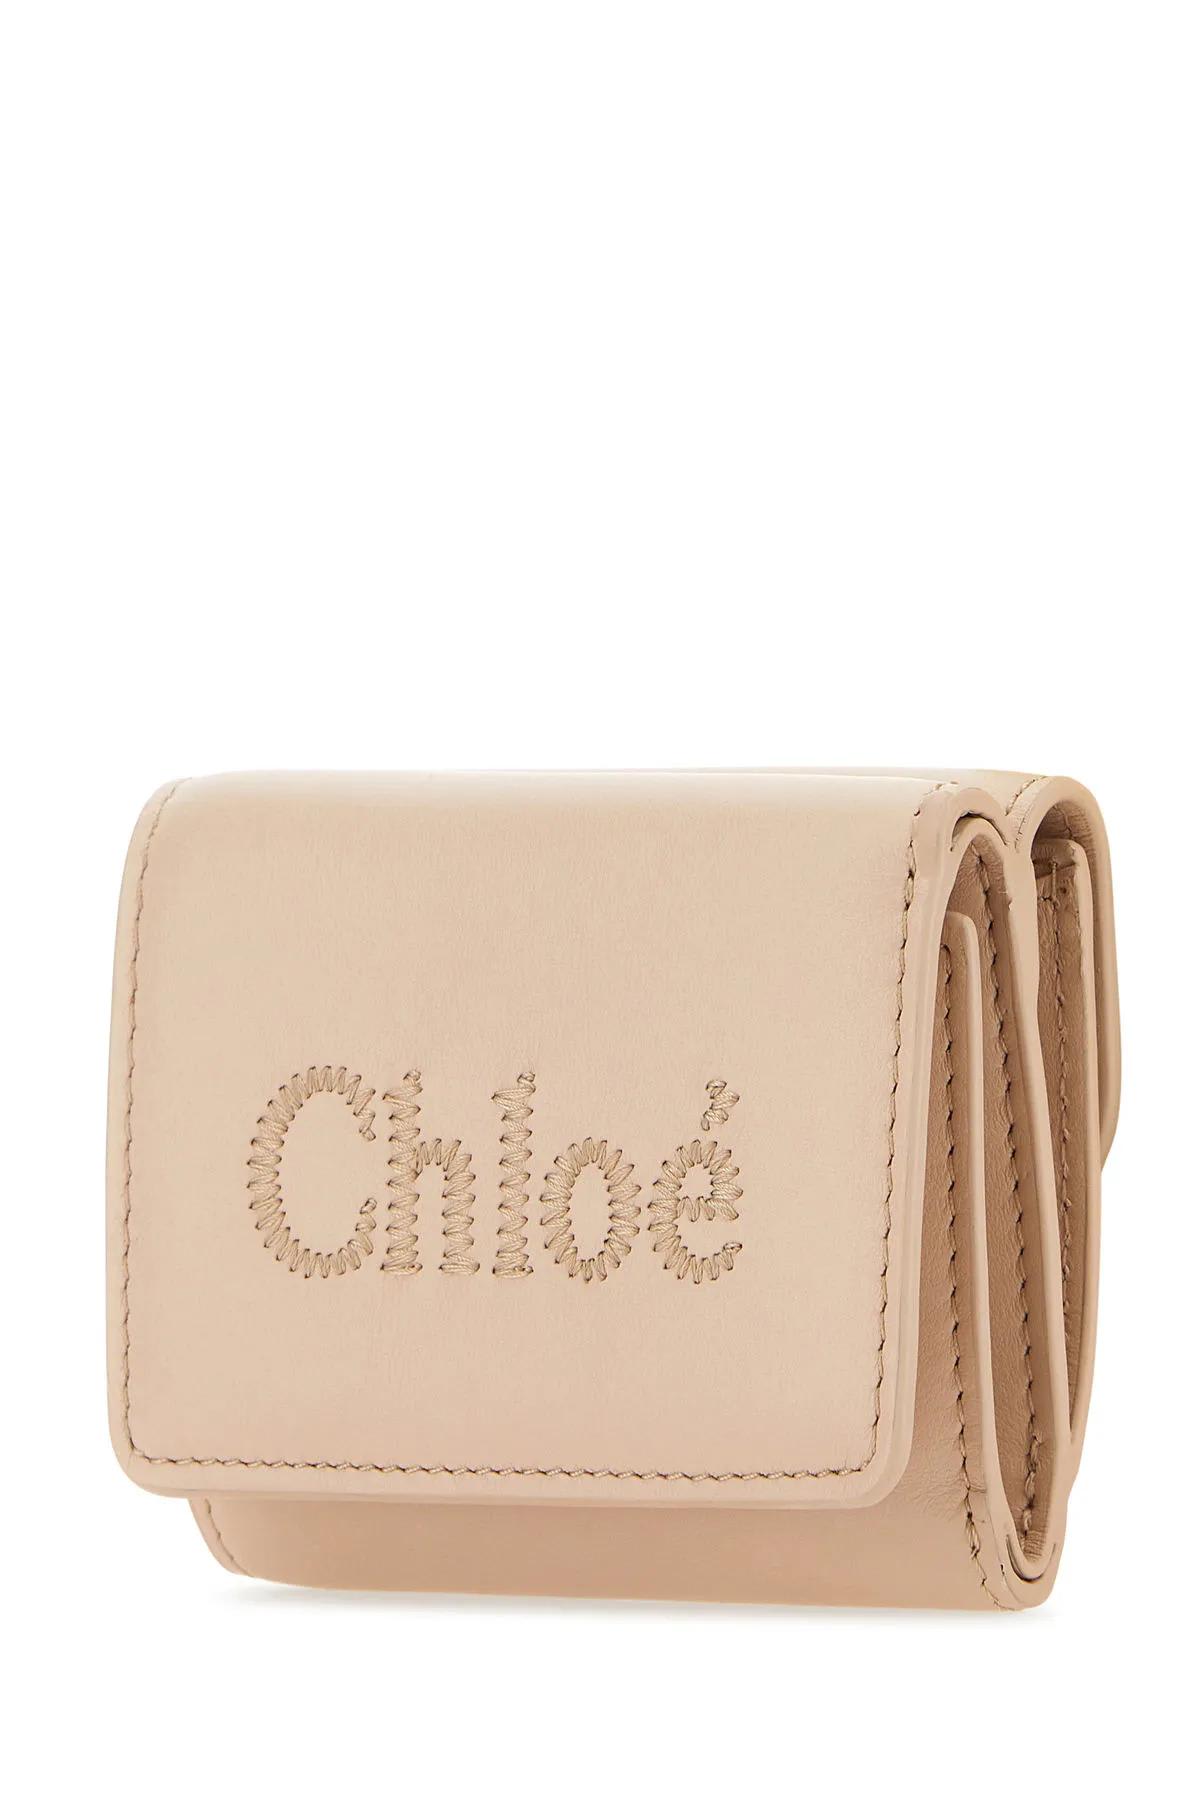 Shop Chloé Powder Pink Leather Wallet